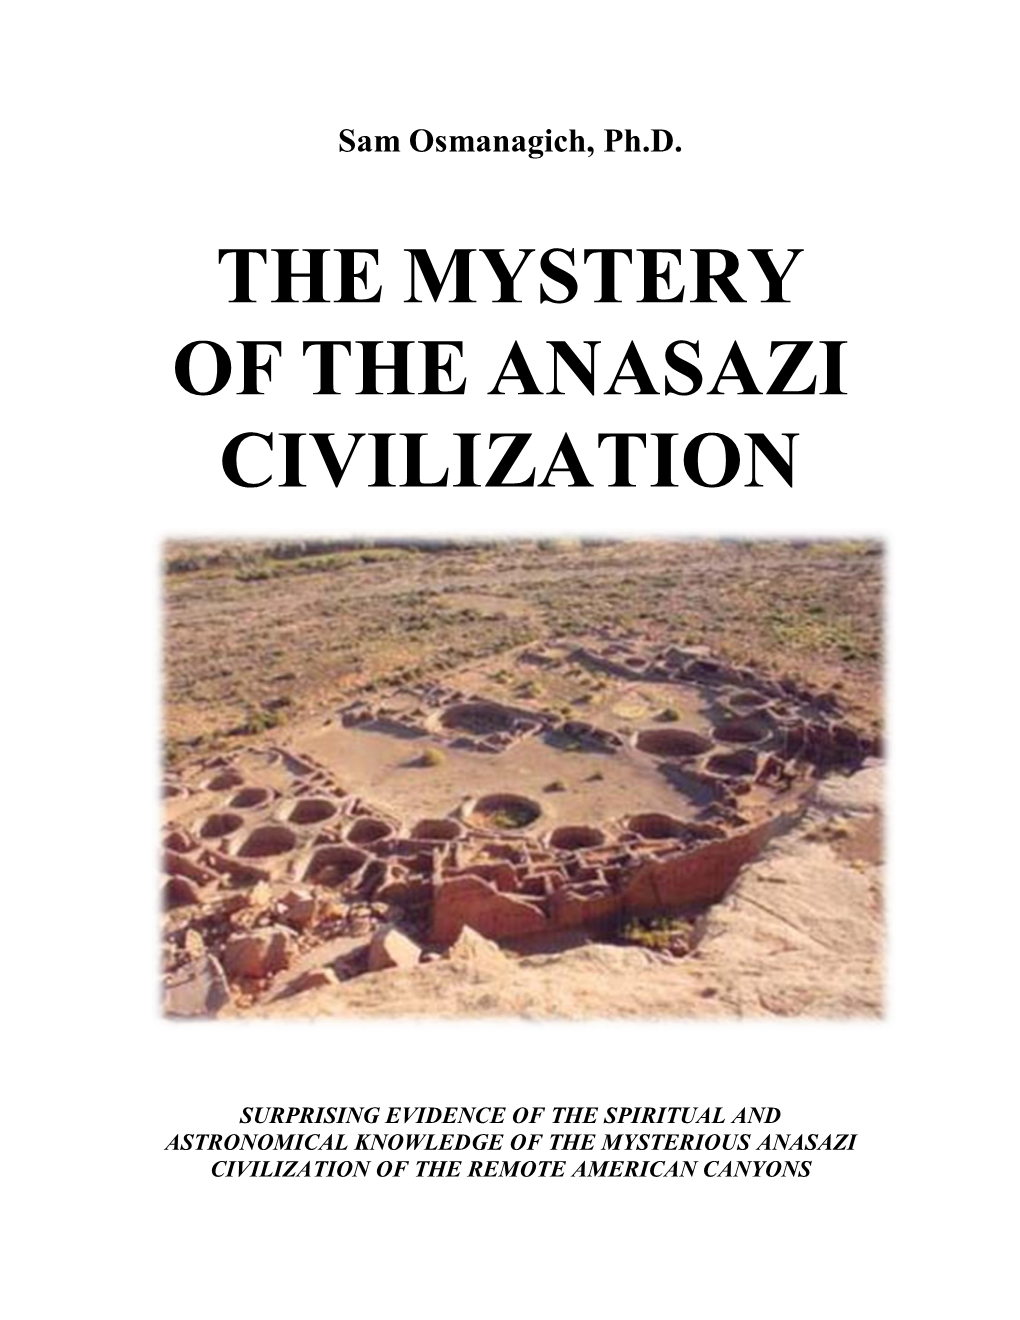 The Mystery of the Anasazi Civilization